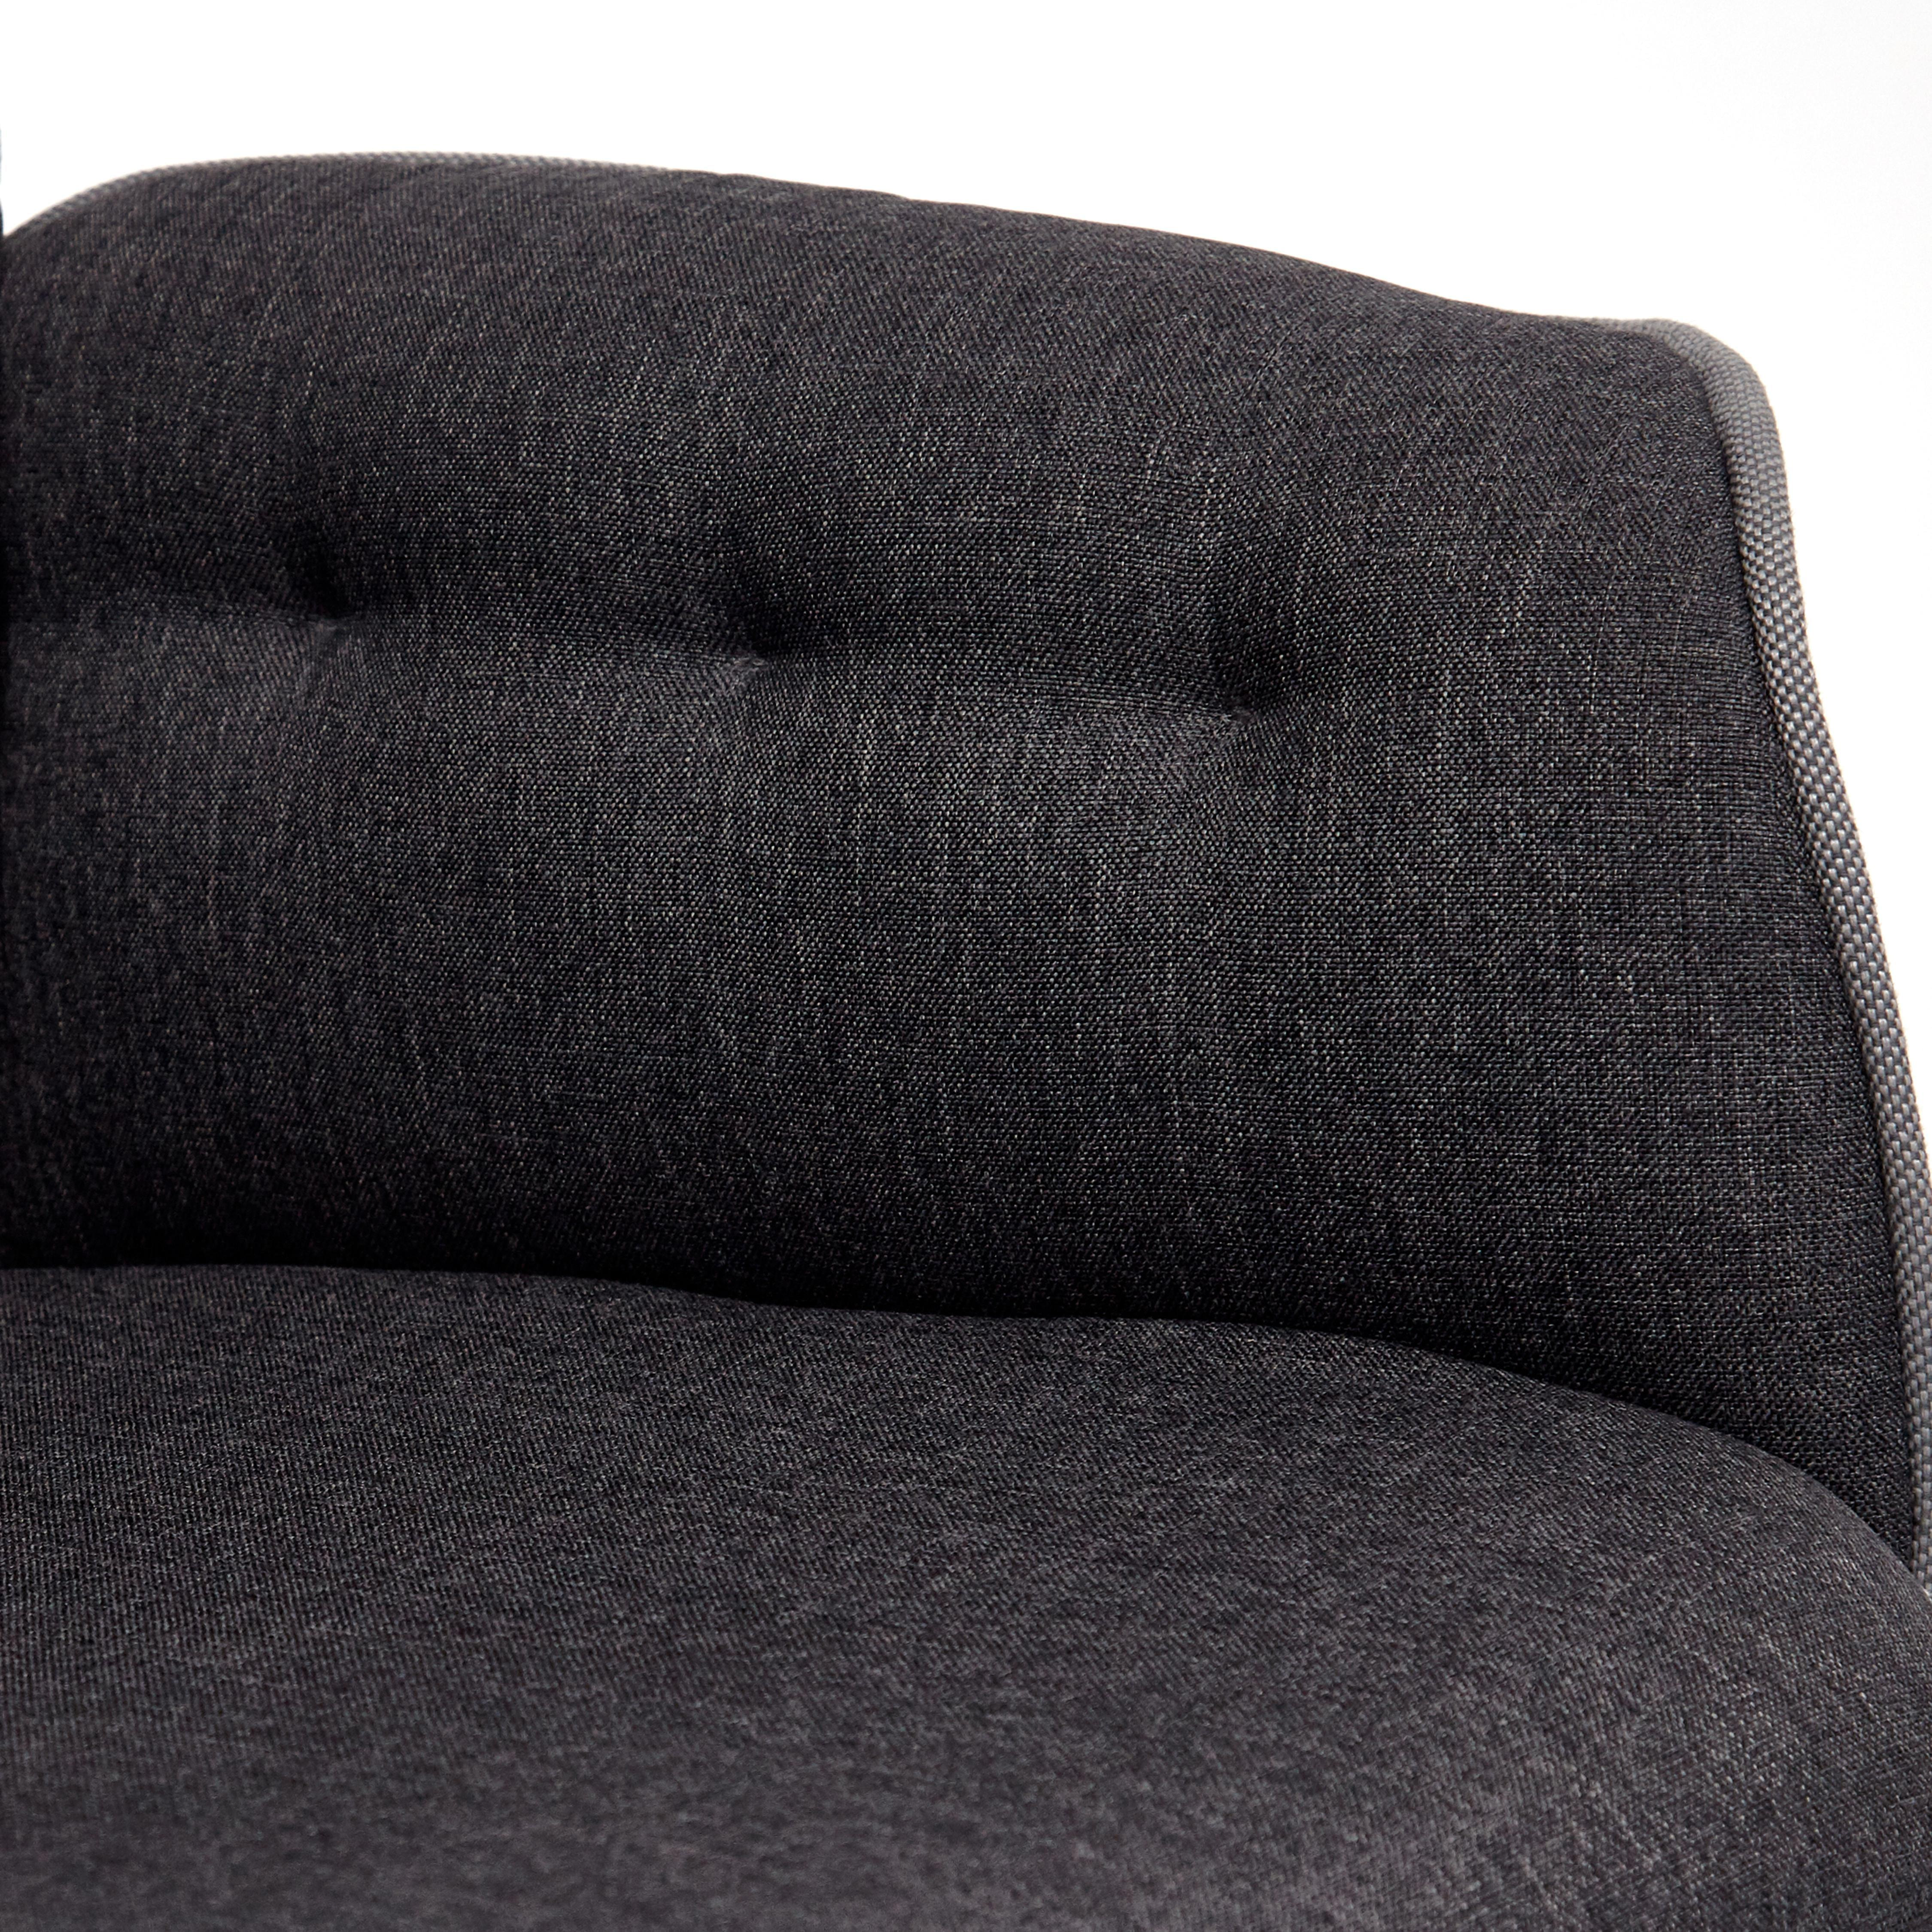 Купить Кресло ТС 64х47х132 см ткань серый 1